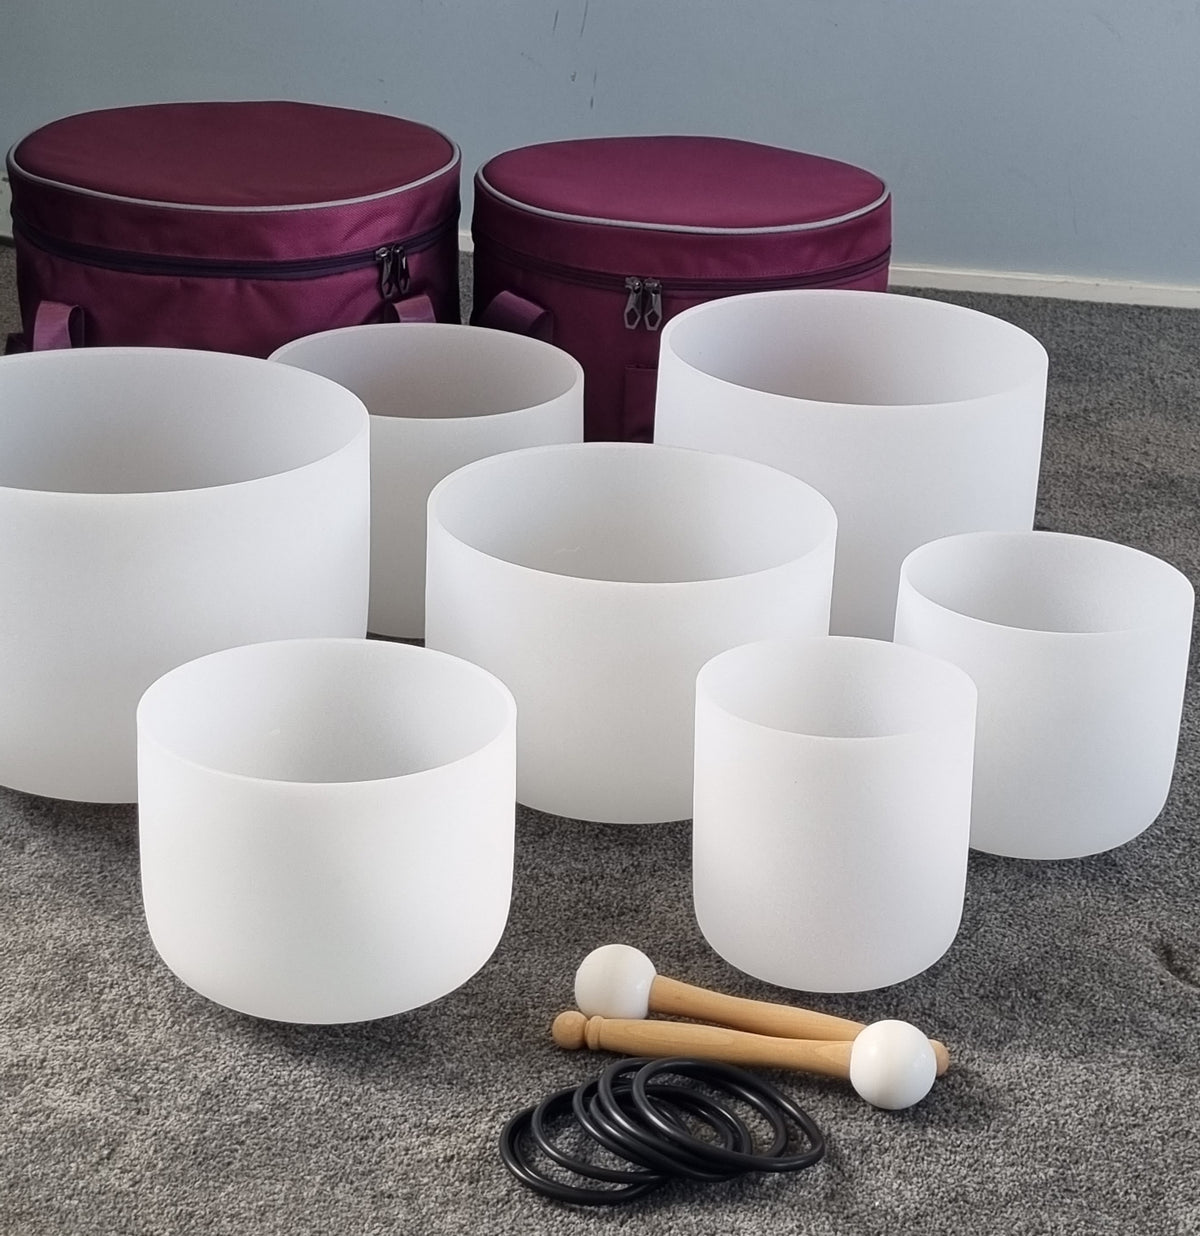 Full Set of 7 Plain White Quartz Crystal Singing Bowls - NO Symbols